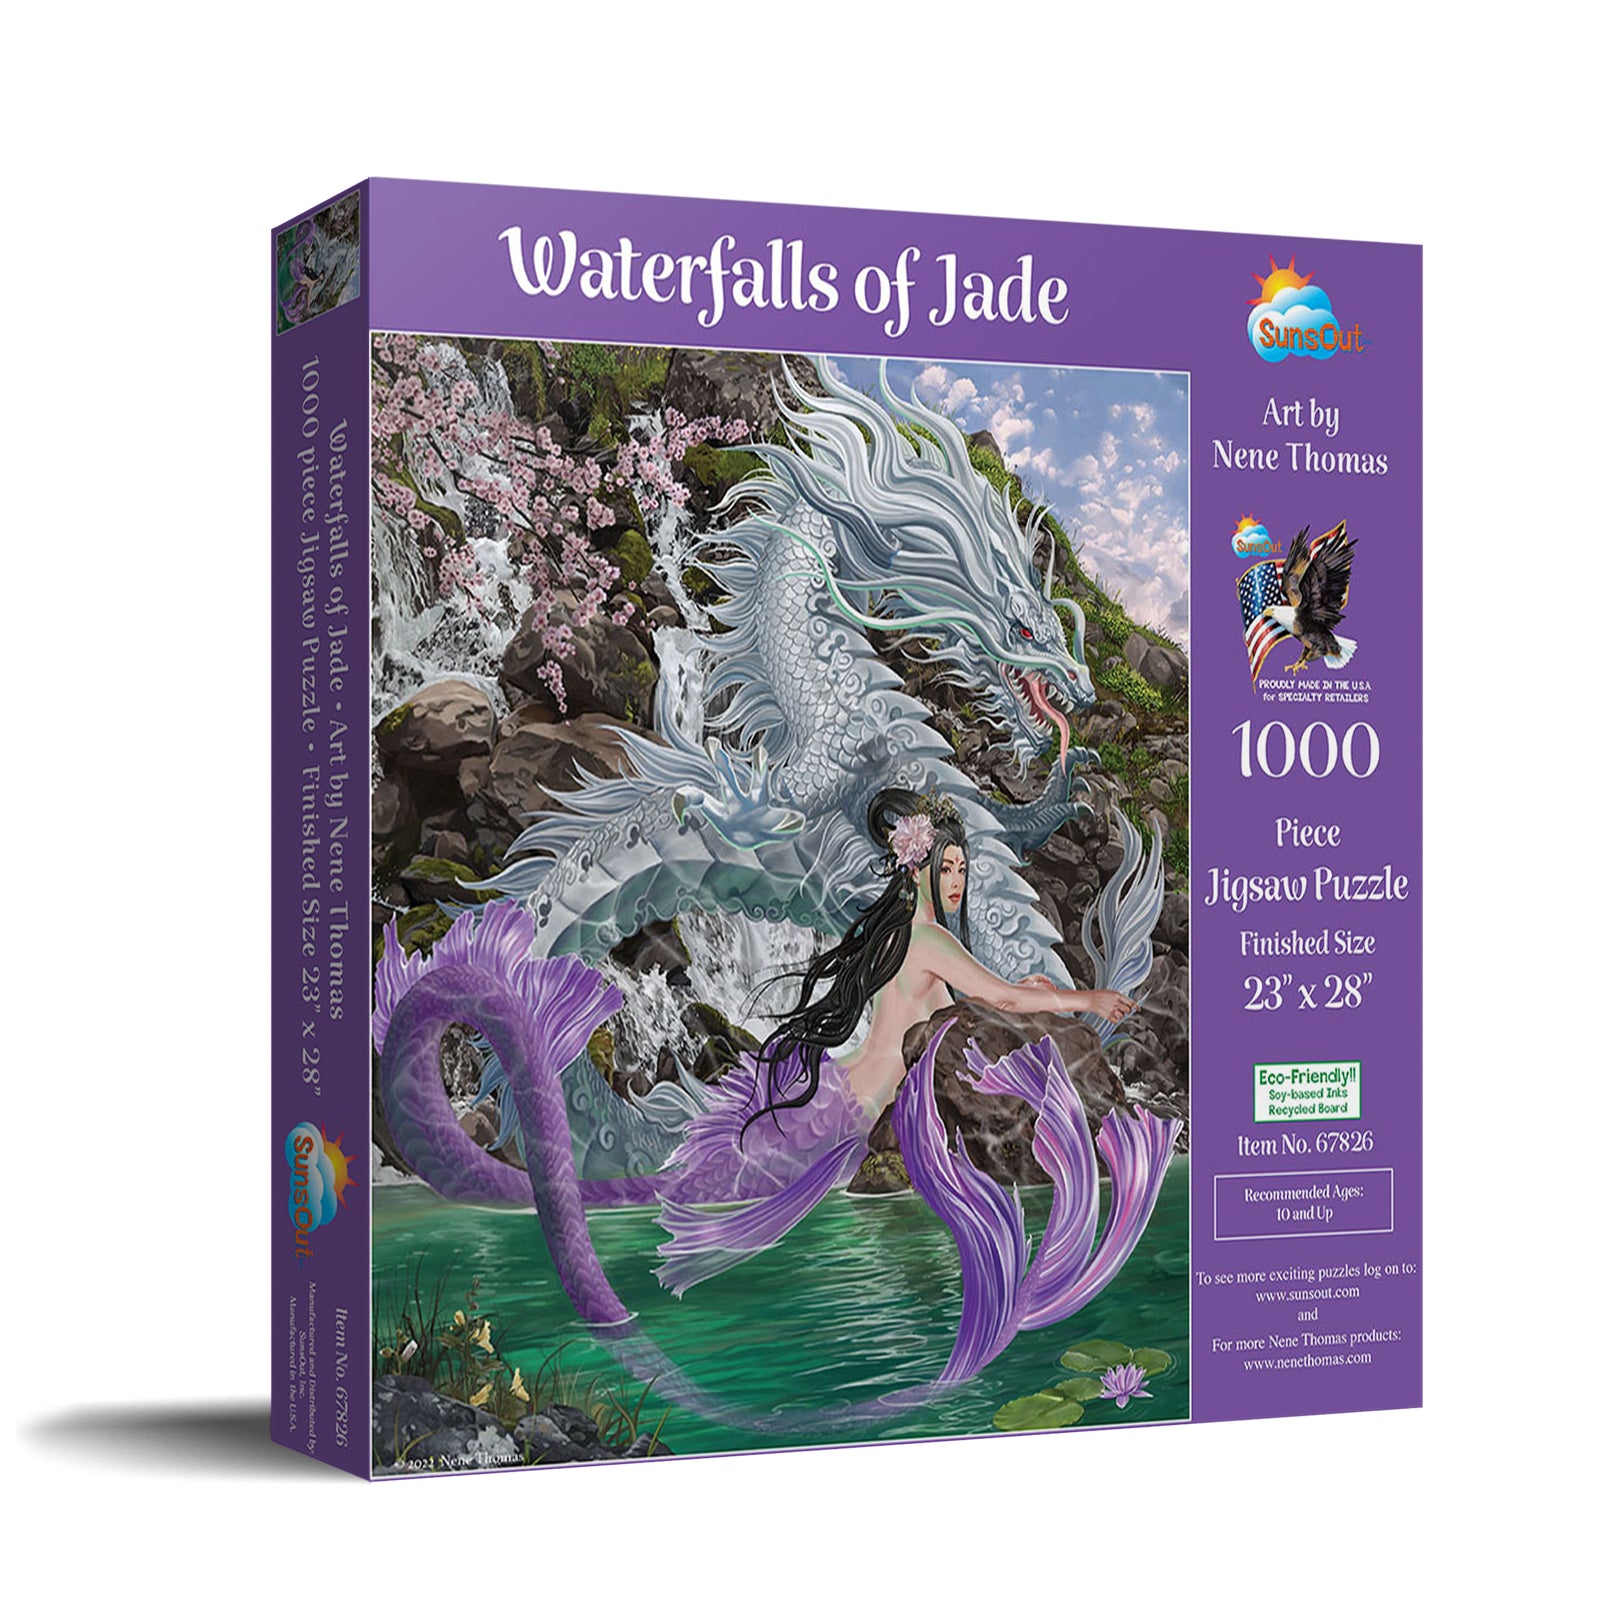 Waterfalls of Jade by Nene Thomas 1000 Piece Jigsaw Puzzle